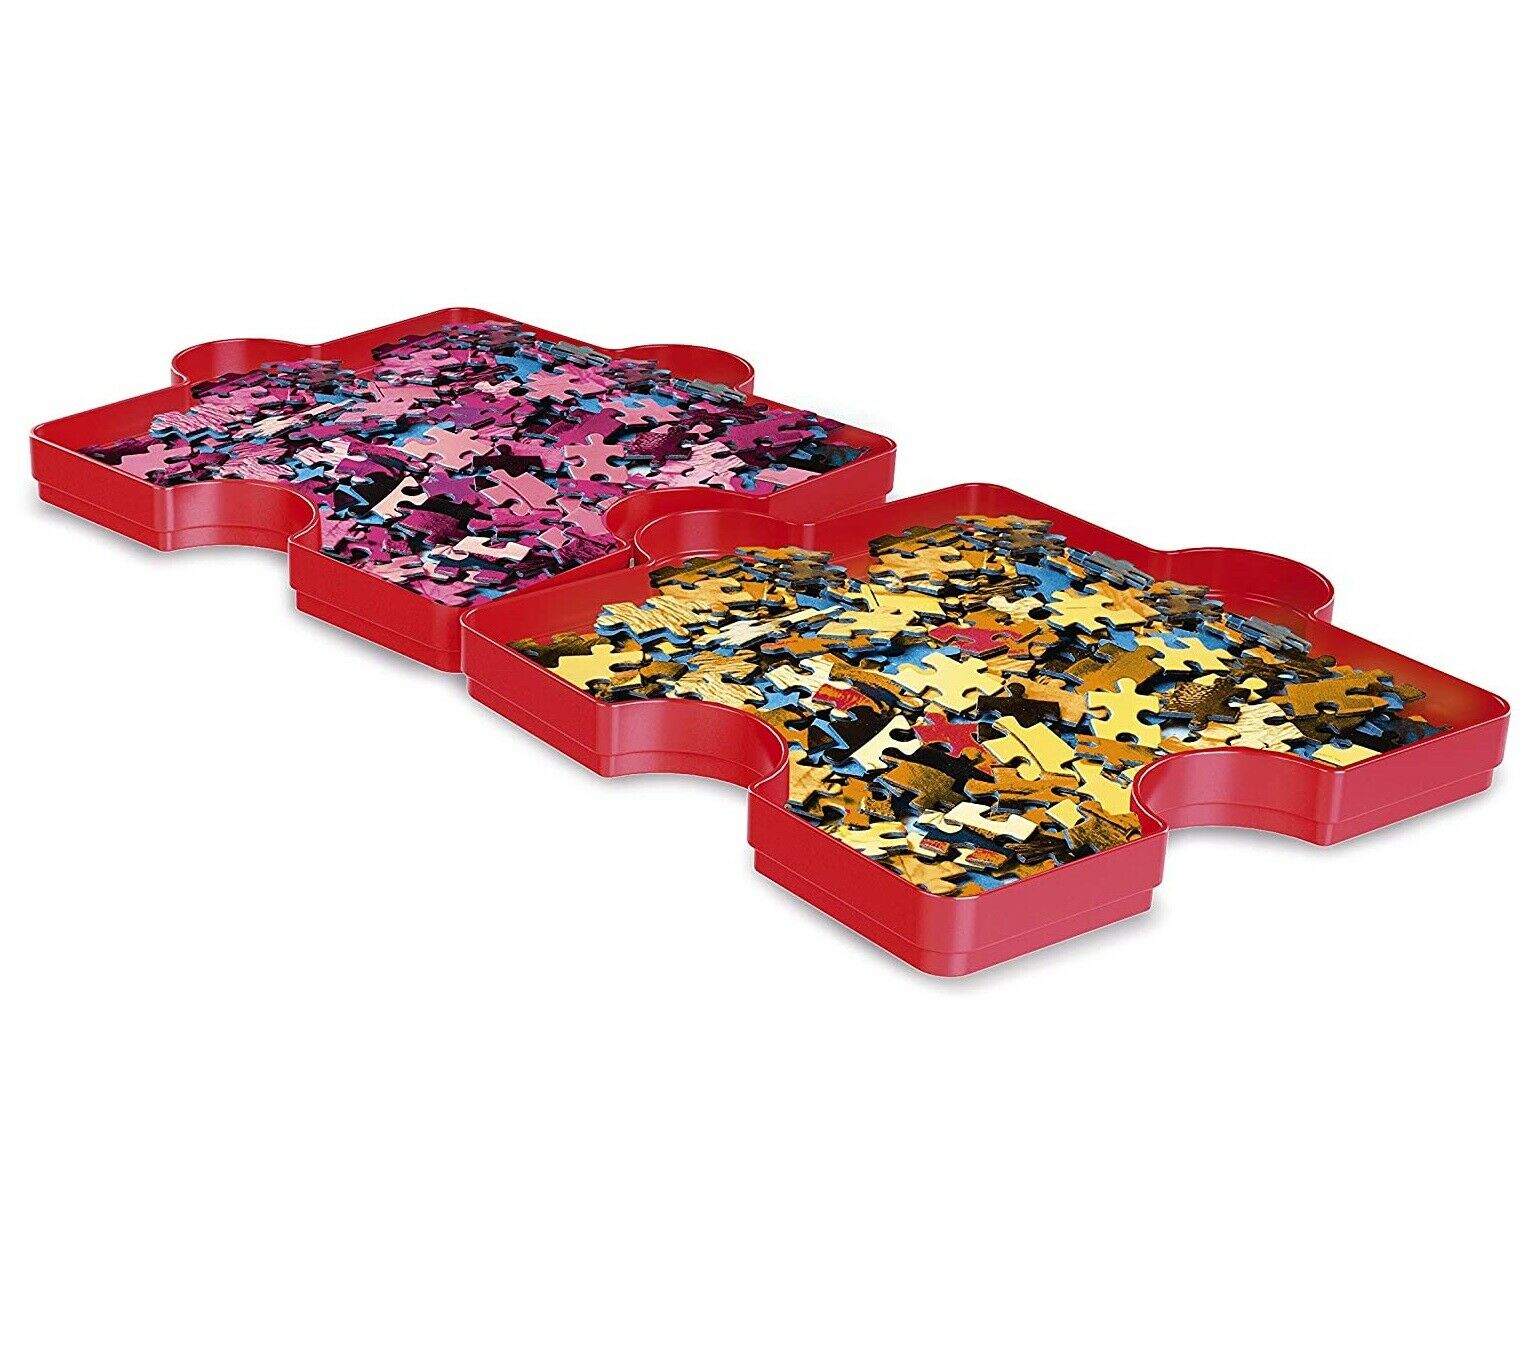 Puzzle Sortierer rot 6 Stück Clementoni Kinderspielzeug